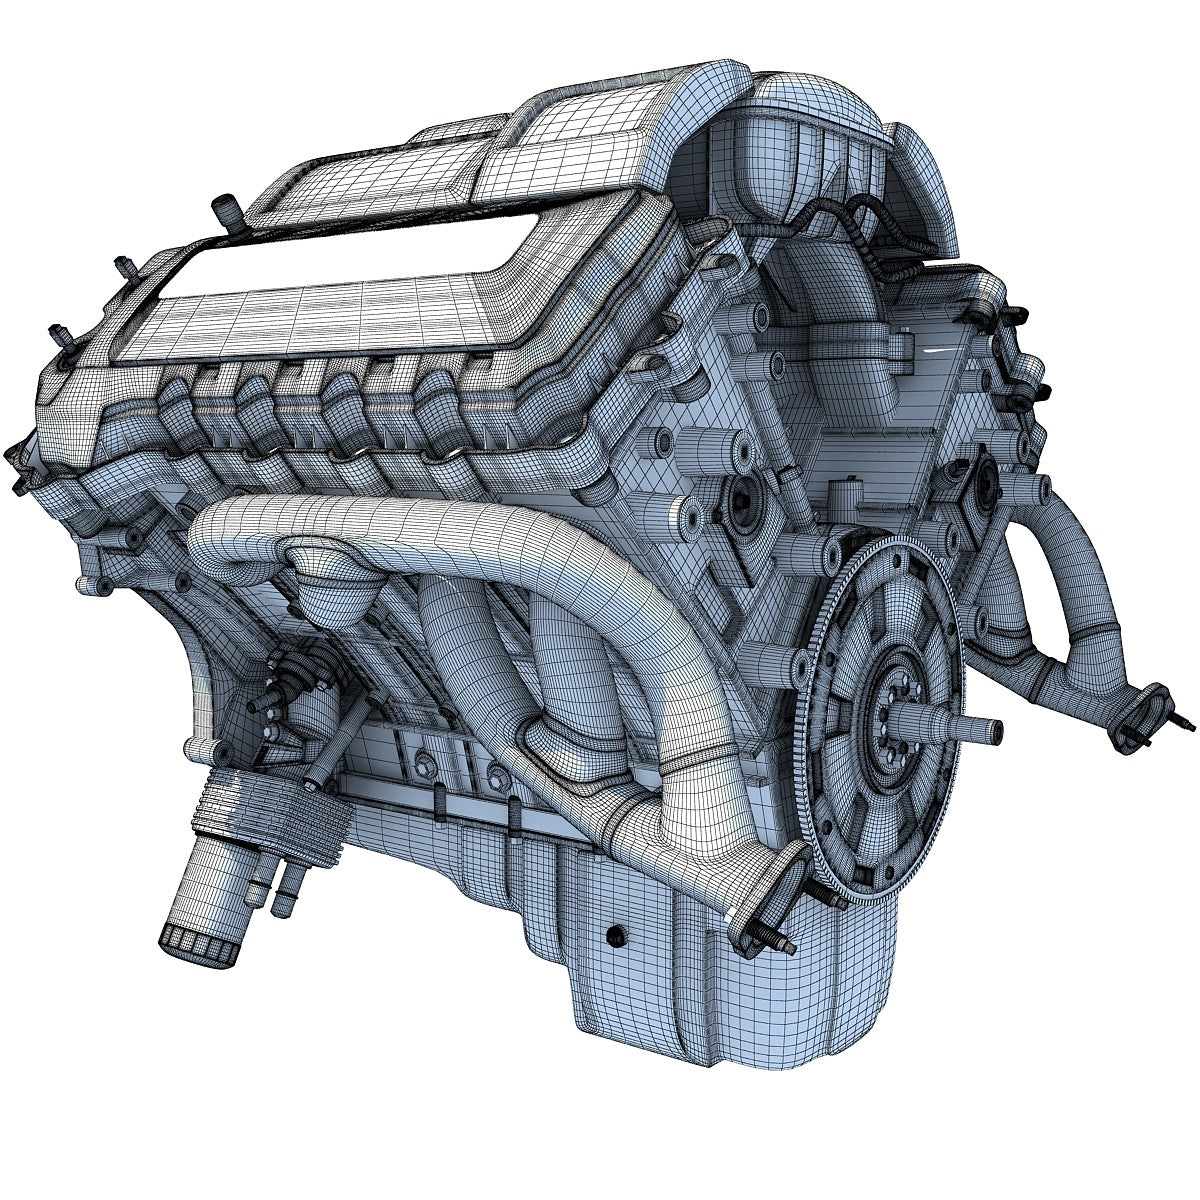 V8 Engine Model